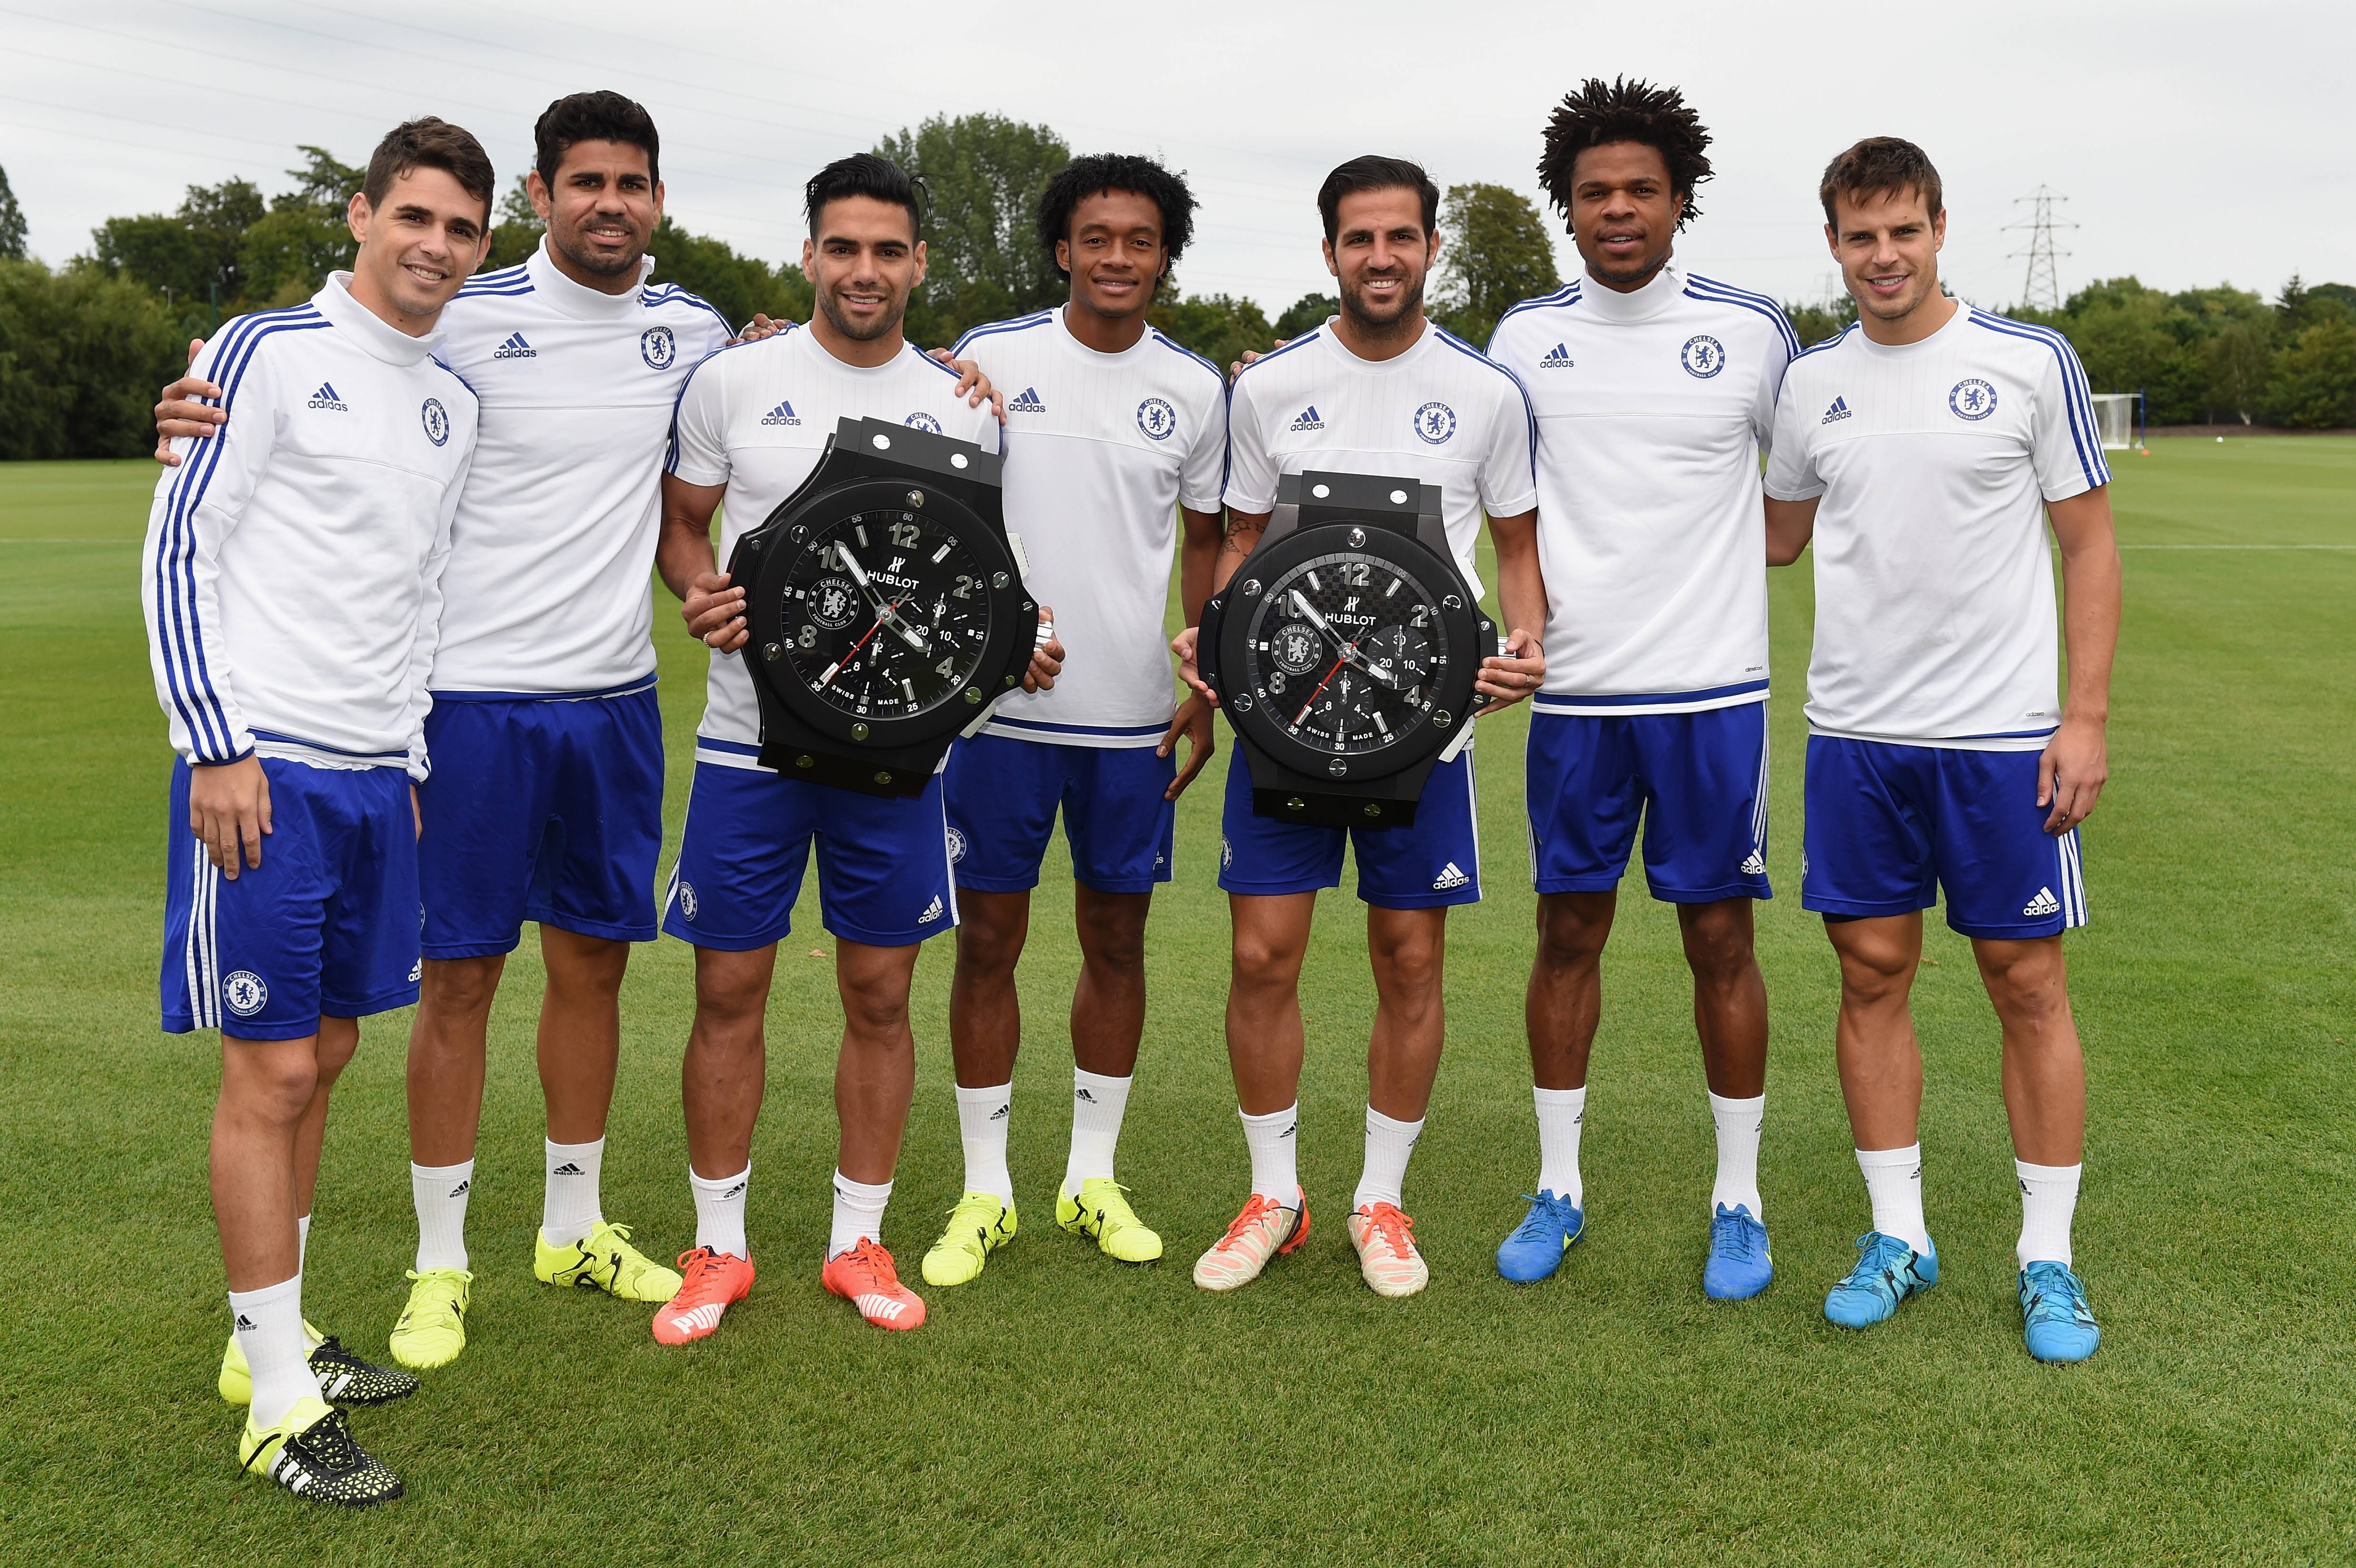 Chelsea's Oscar, Diego Costa, Radamel Falcao, Juan Cuadrado, Cesc Fabregas, Loic Remy, Cesar Azpilicueta with Hublot Clocks at the Cobham Training Ground on 12th August 2015 in Cobham, England.